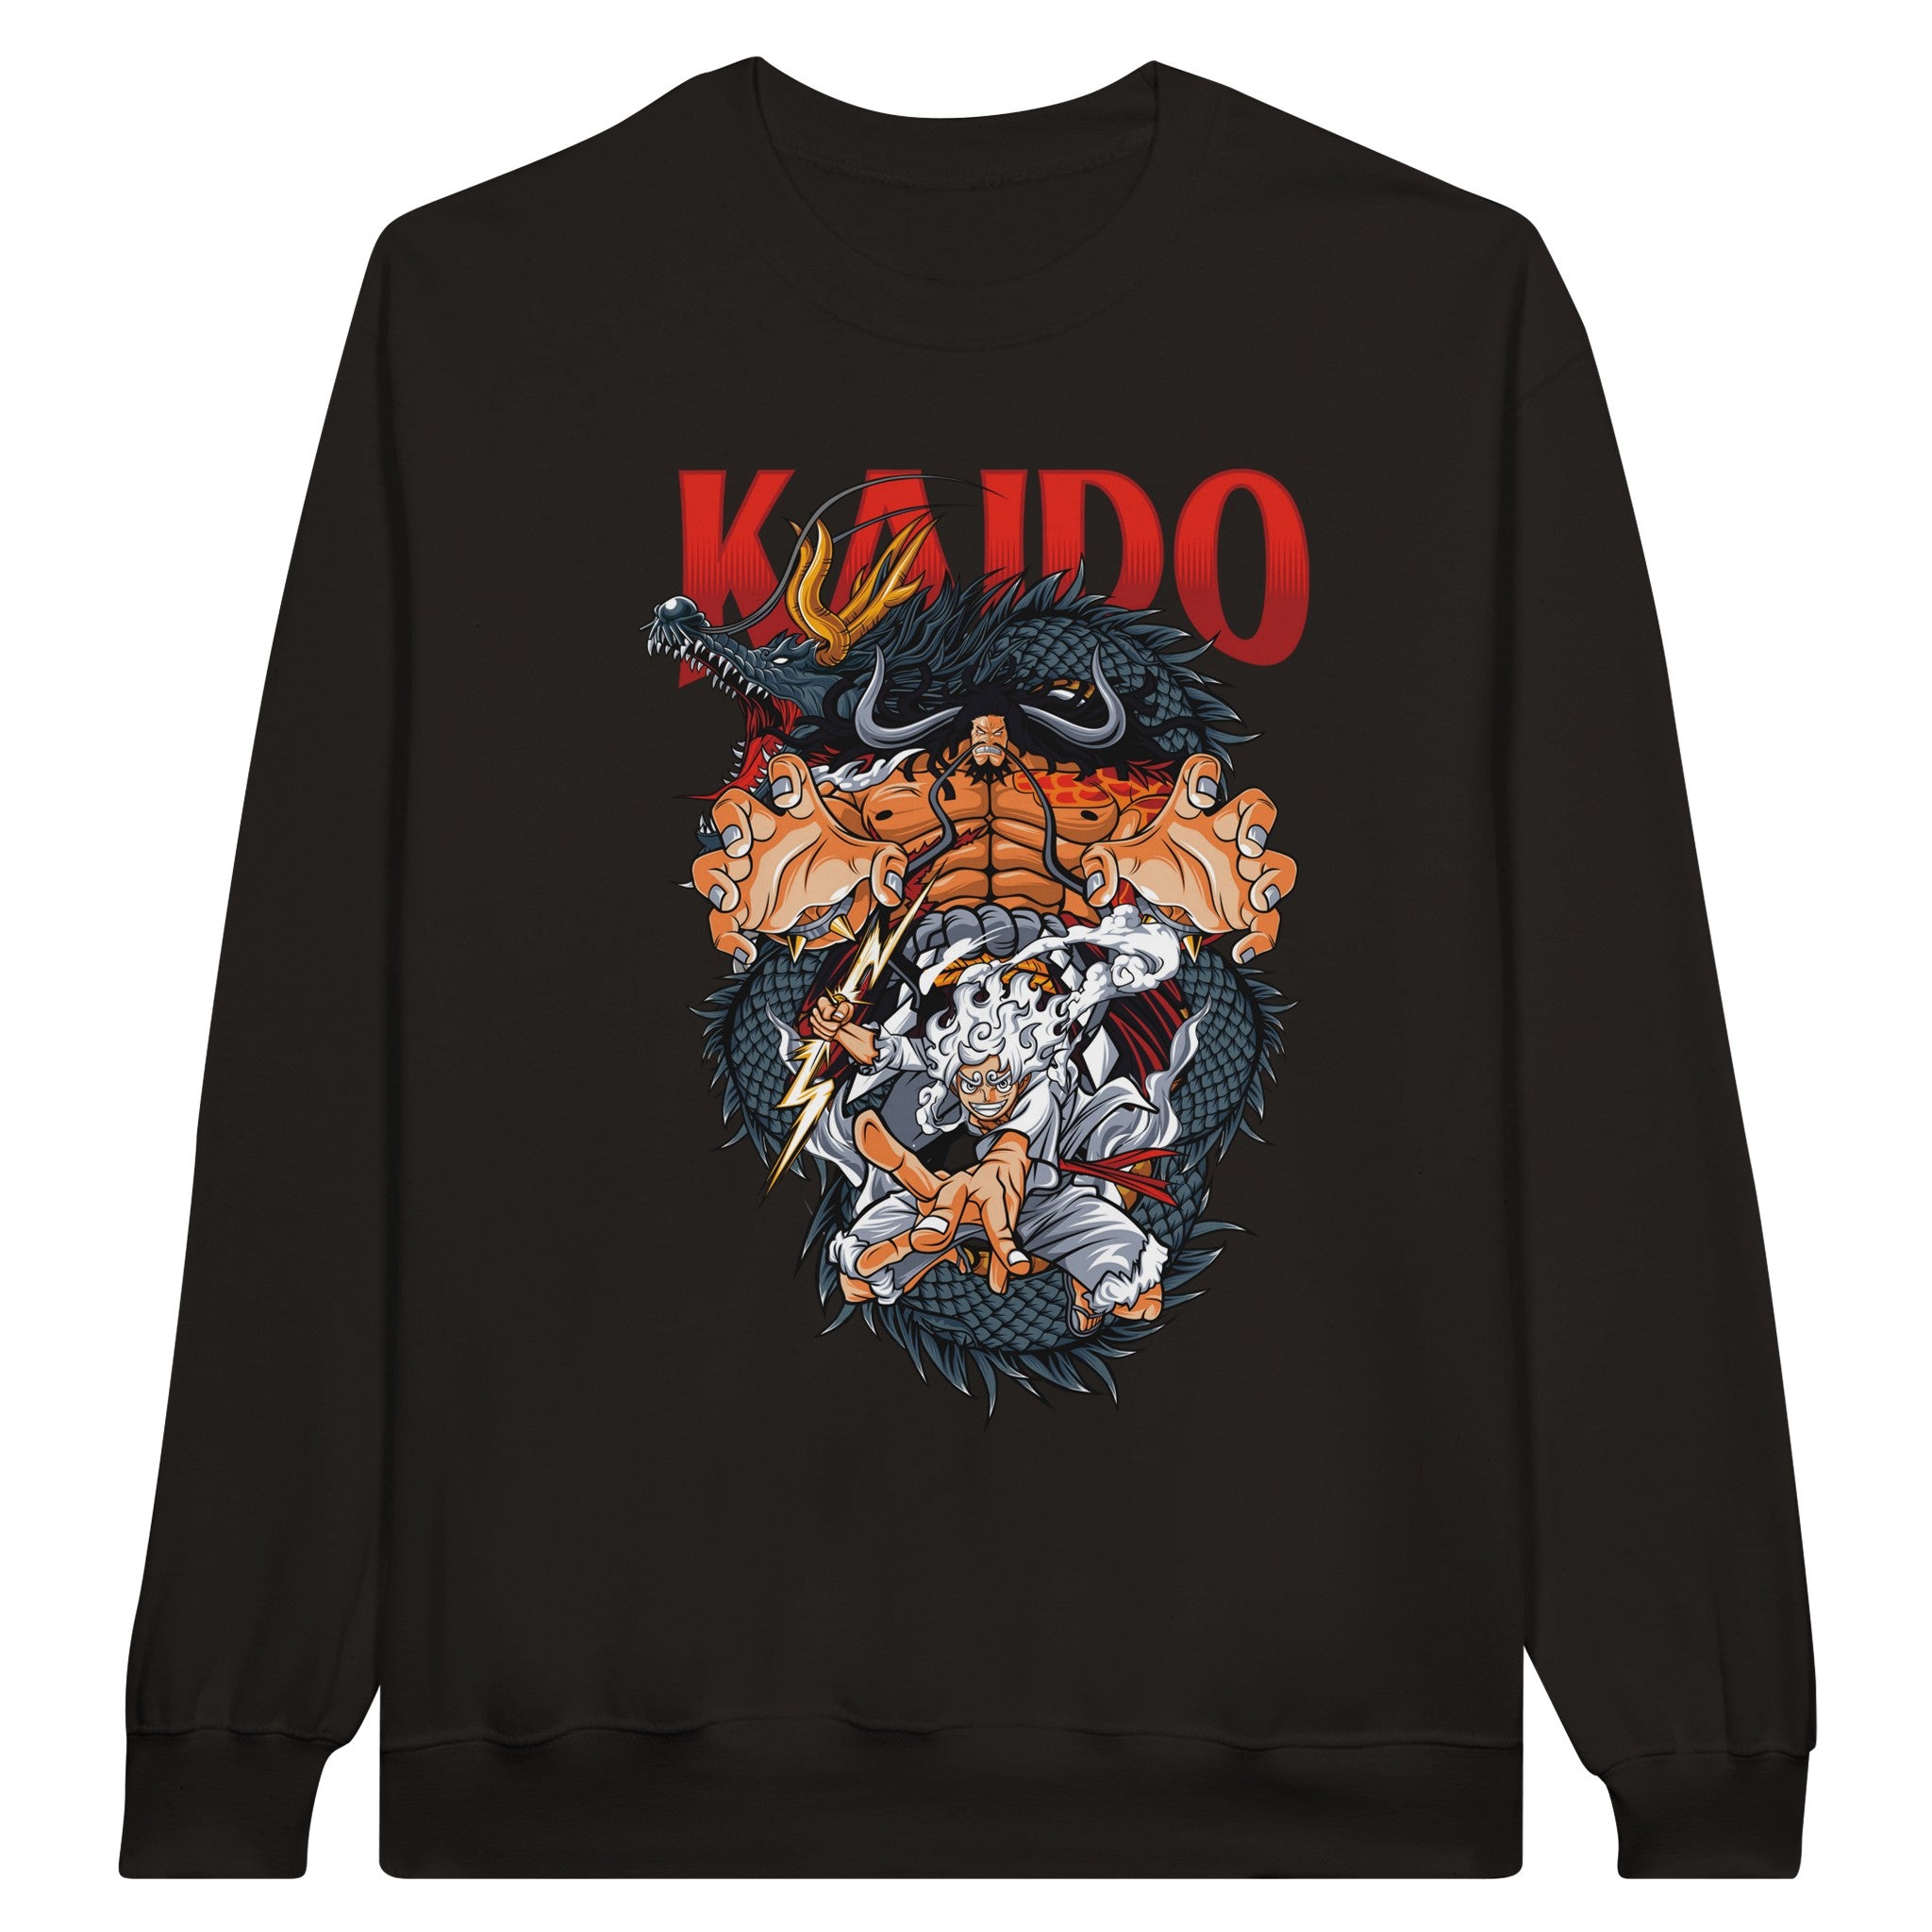 shop and buy one piece anime clothing kaido vs luffy sweatshirt/jumper/longsleeve